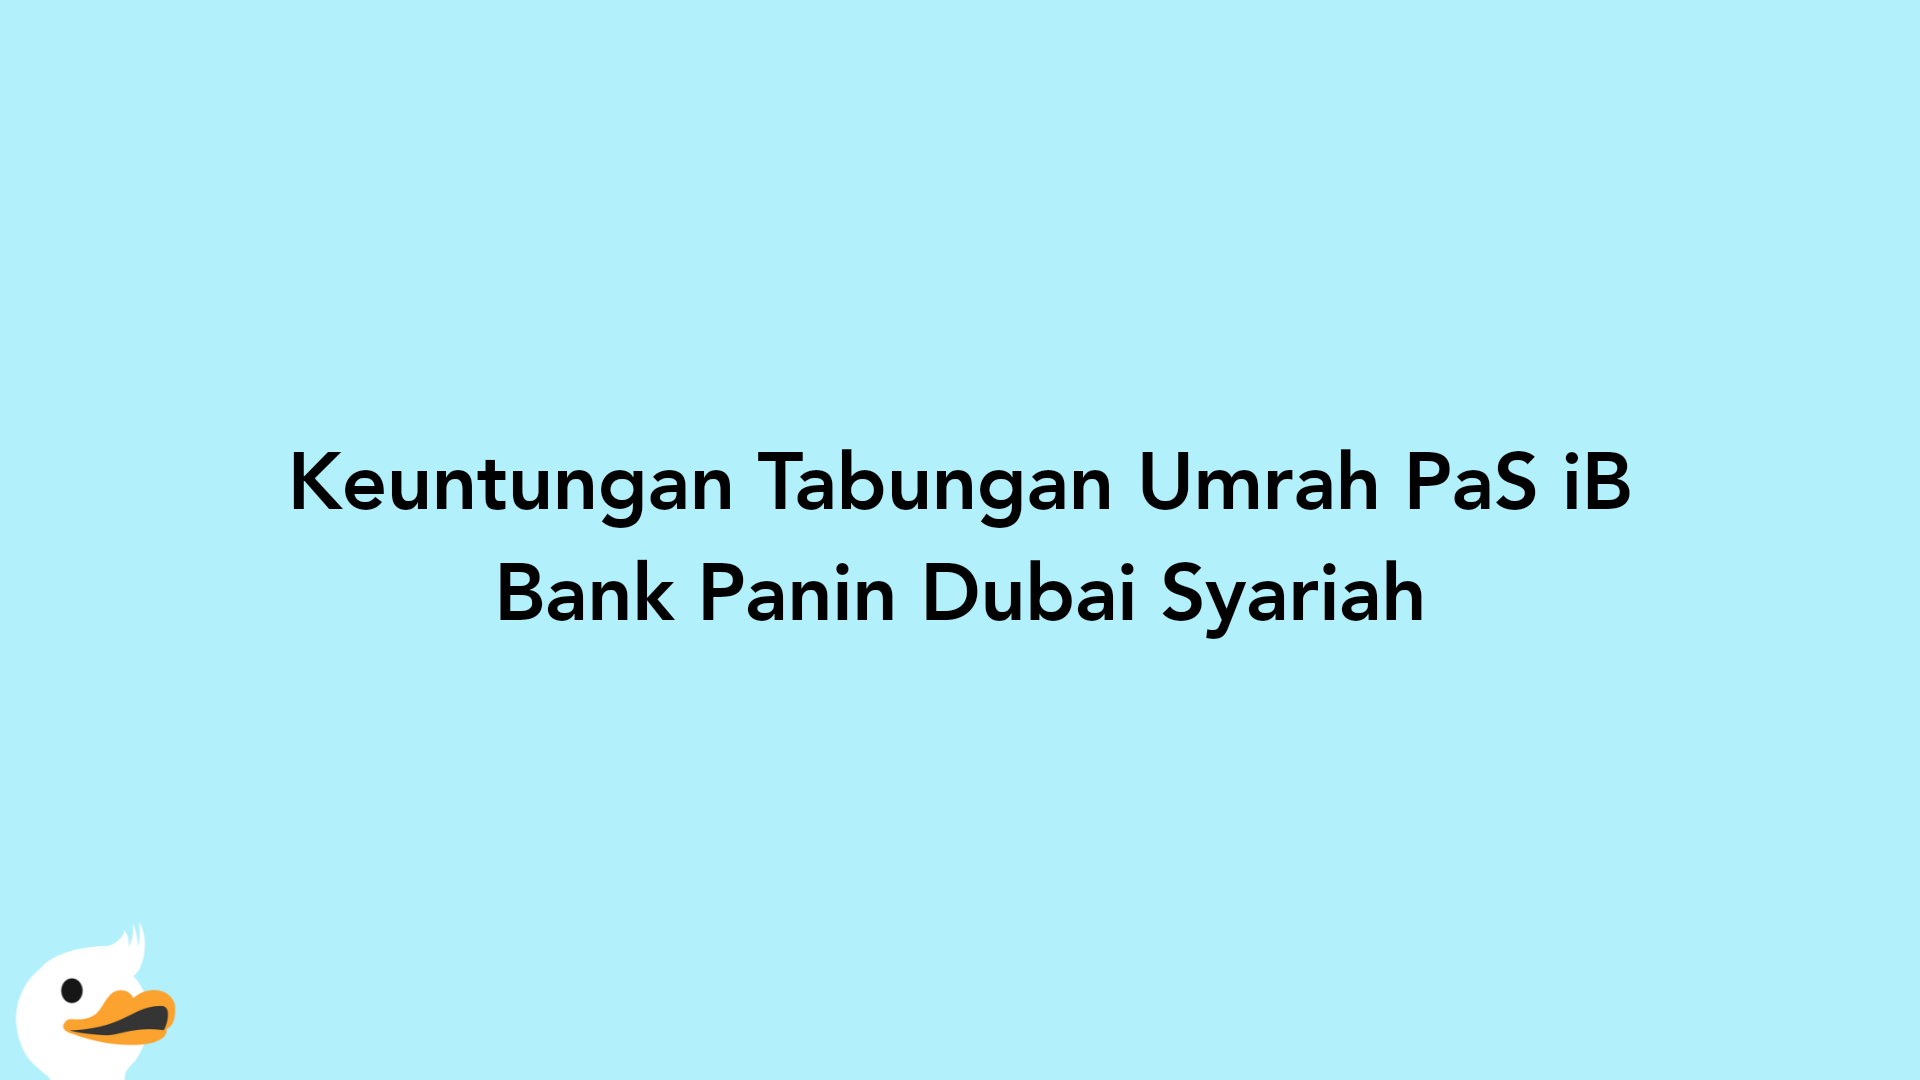 Keuntungan Tabungan Umrah PaS iB Bank Panin Dubai Syariah